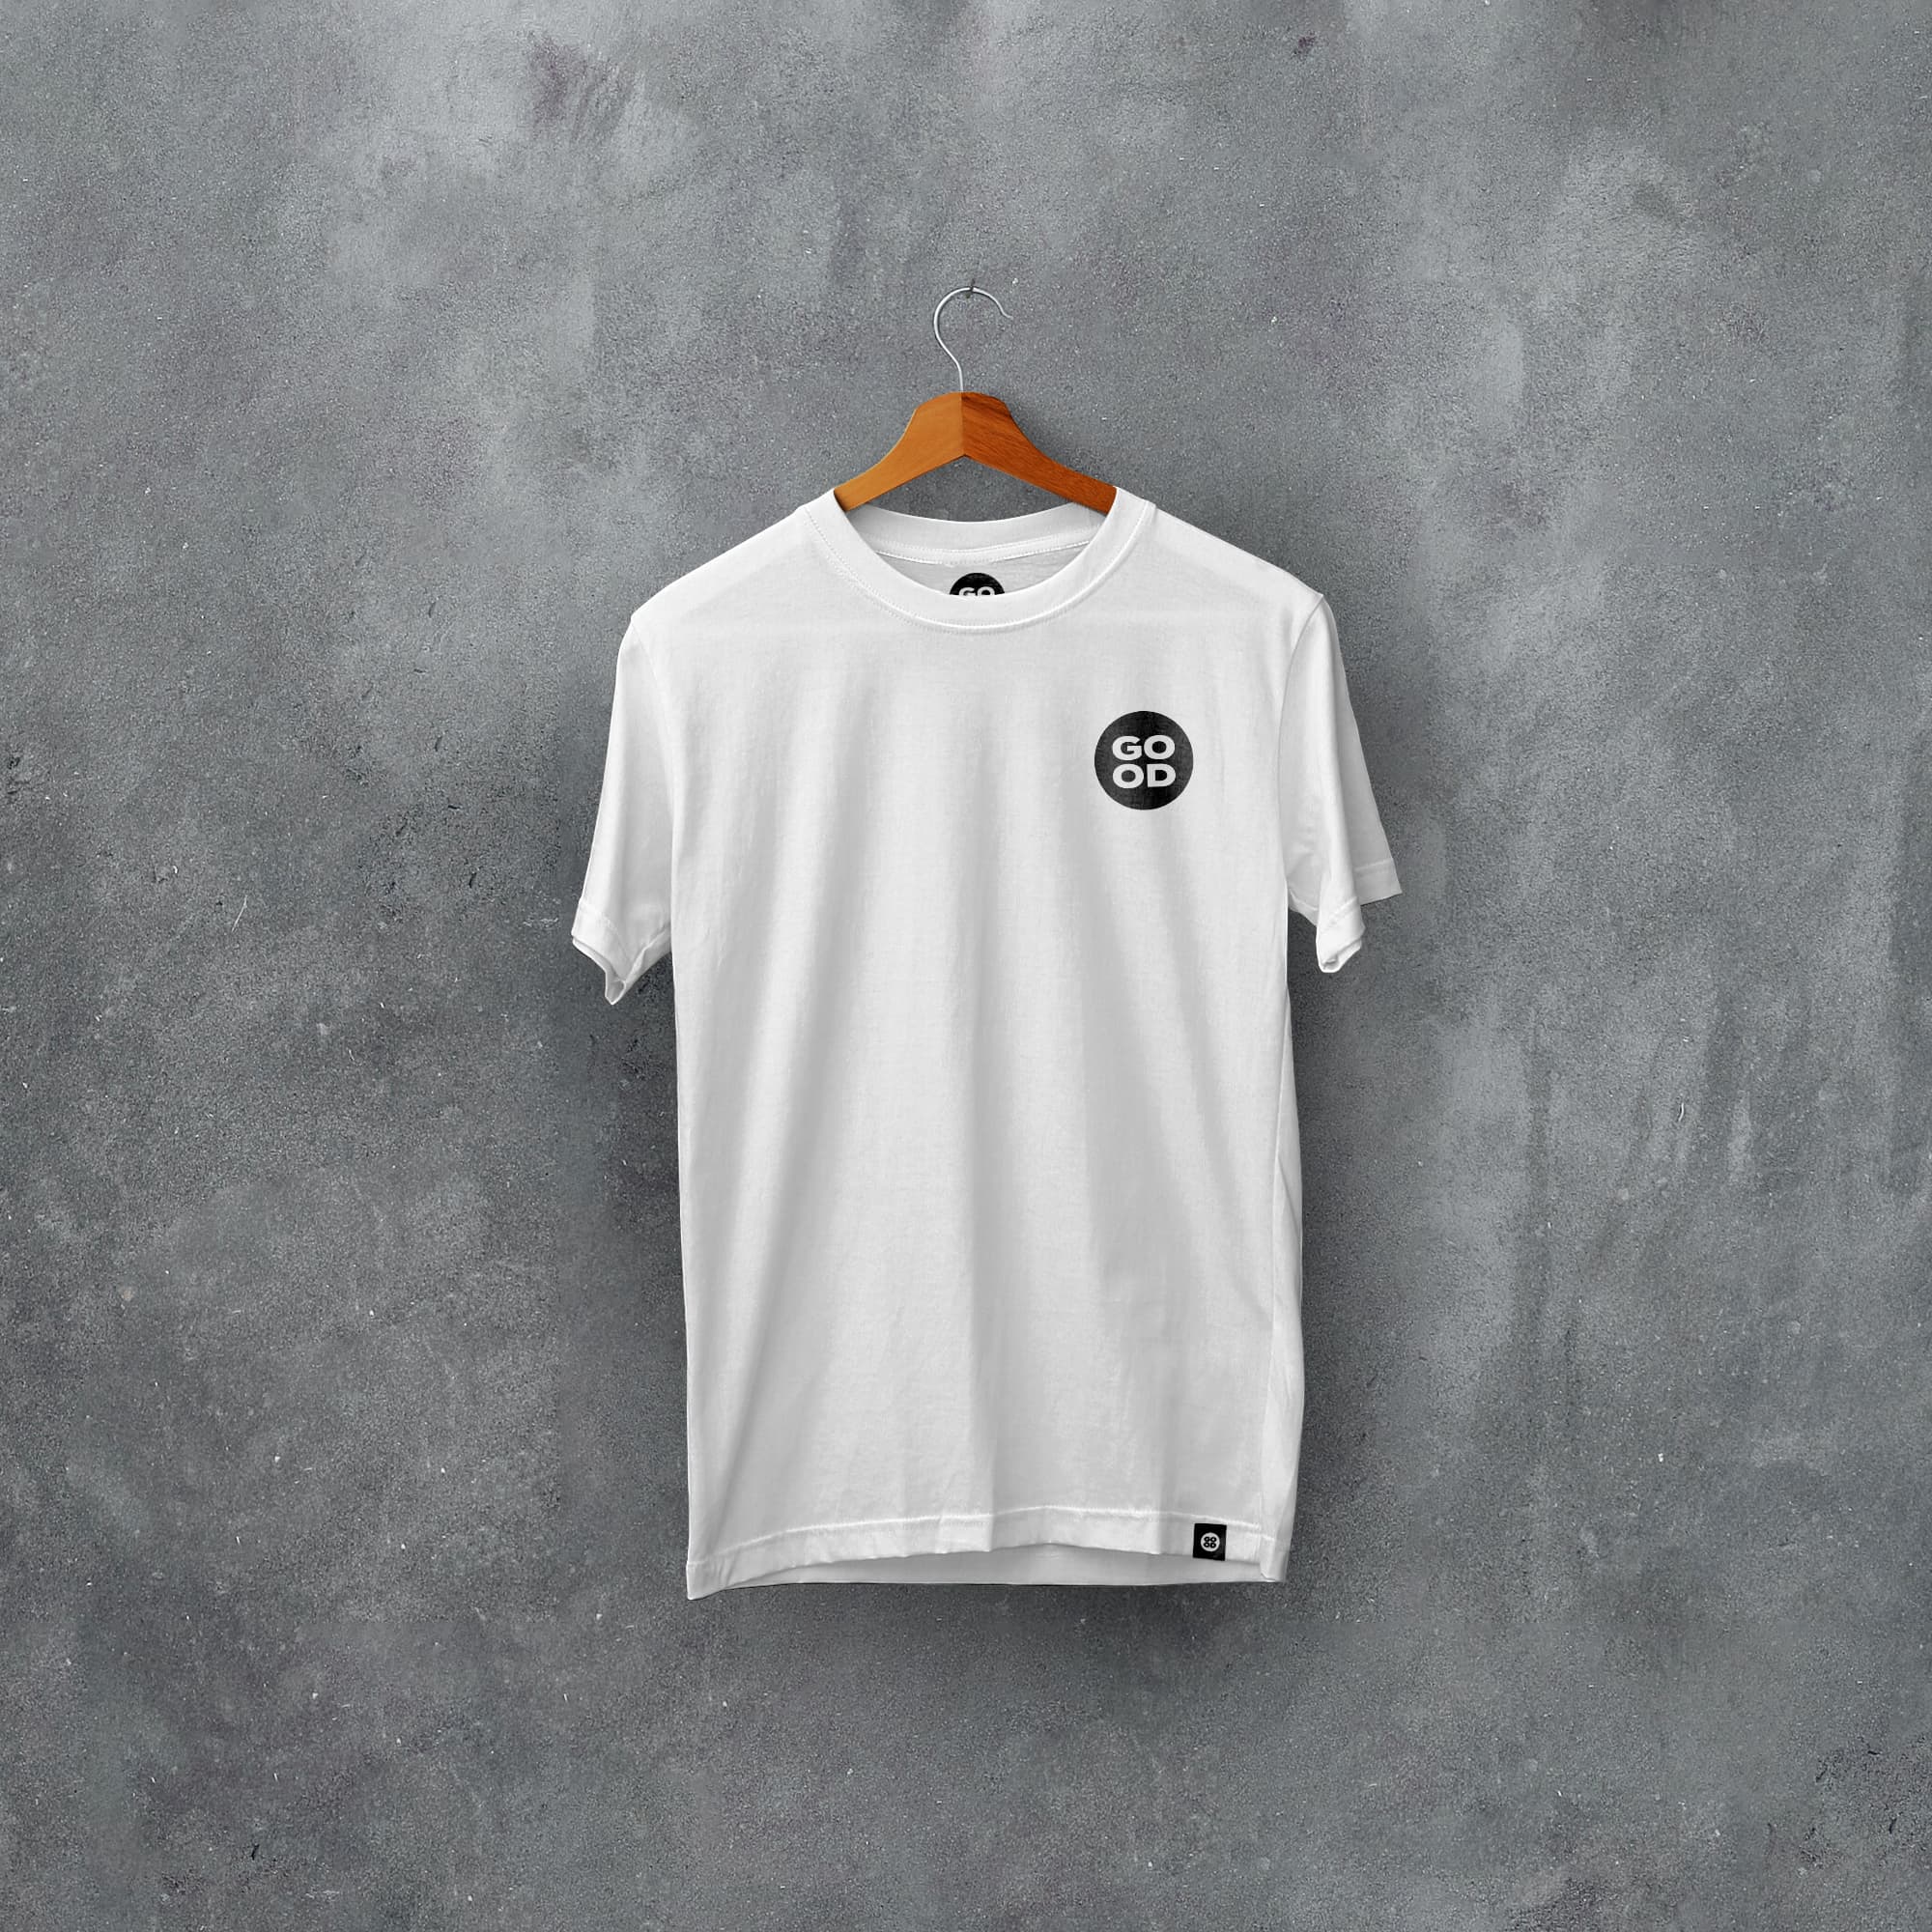 Ayr Classic Kits Football T-Shirt